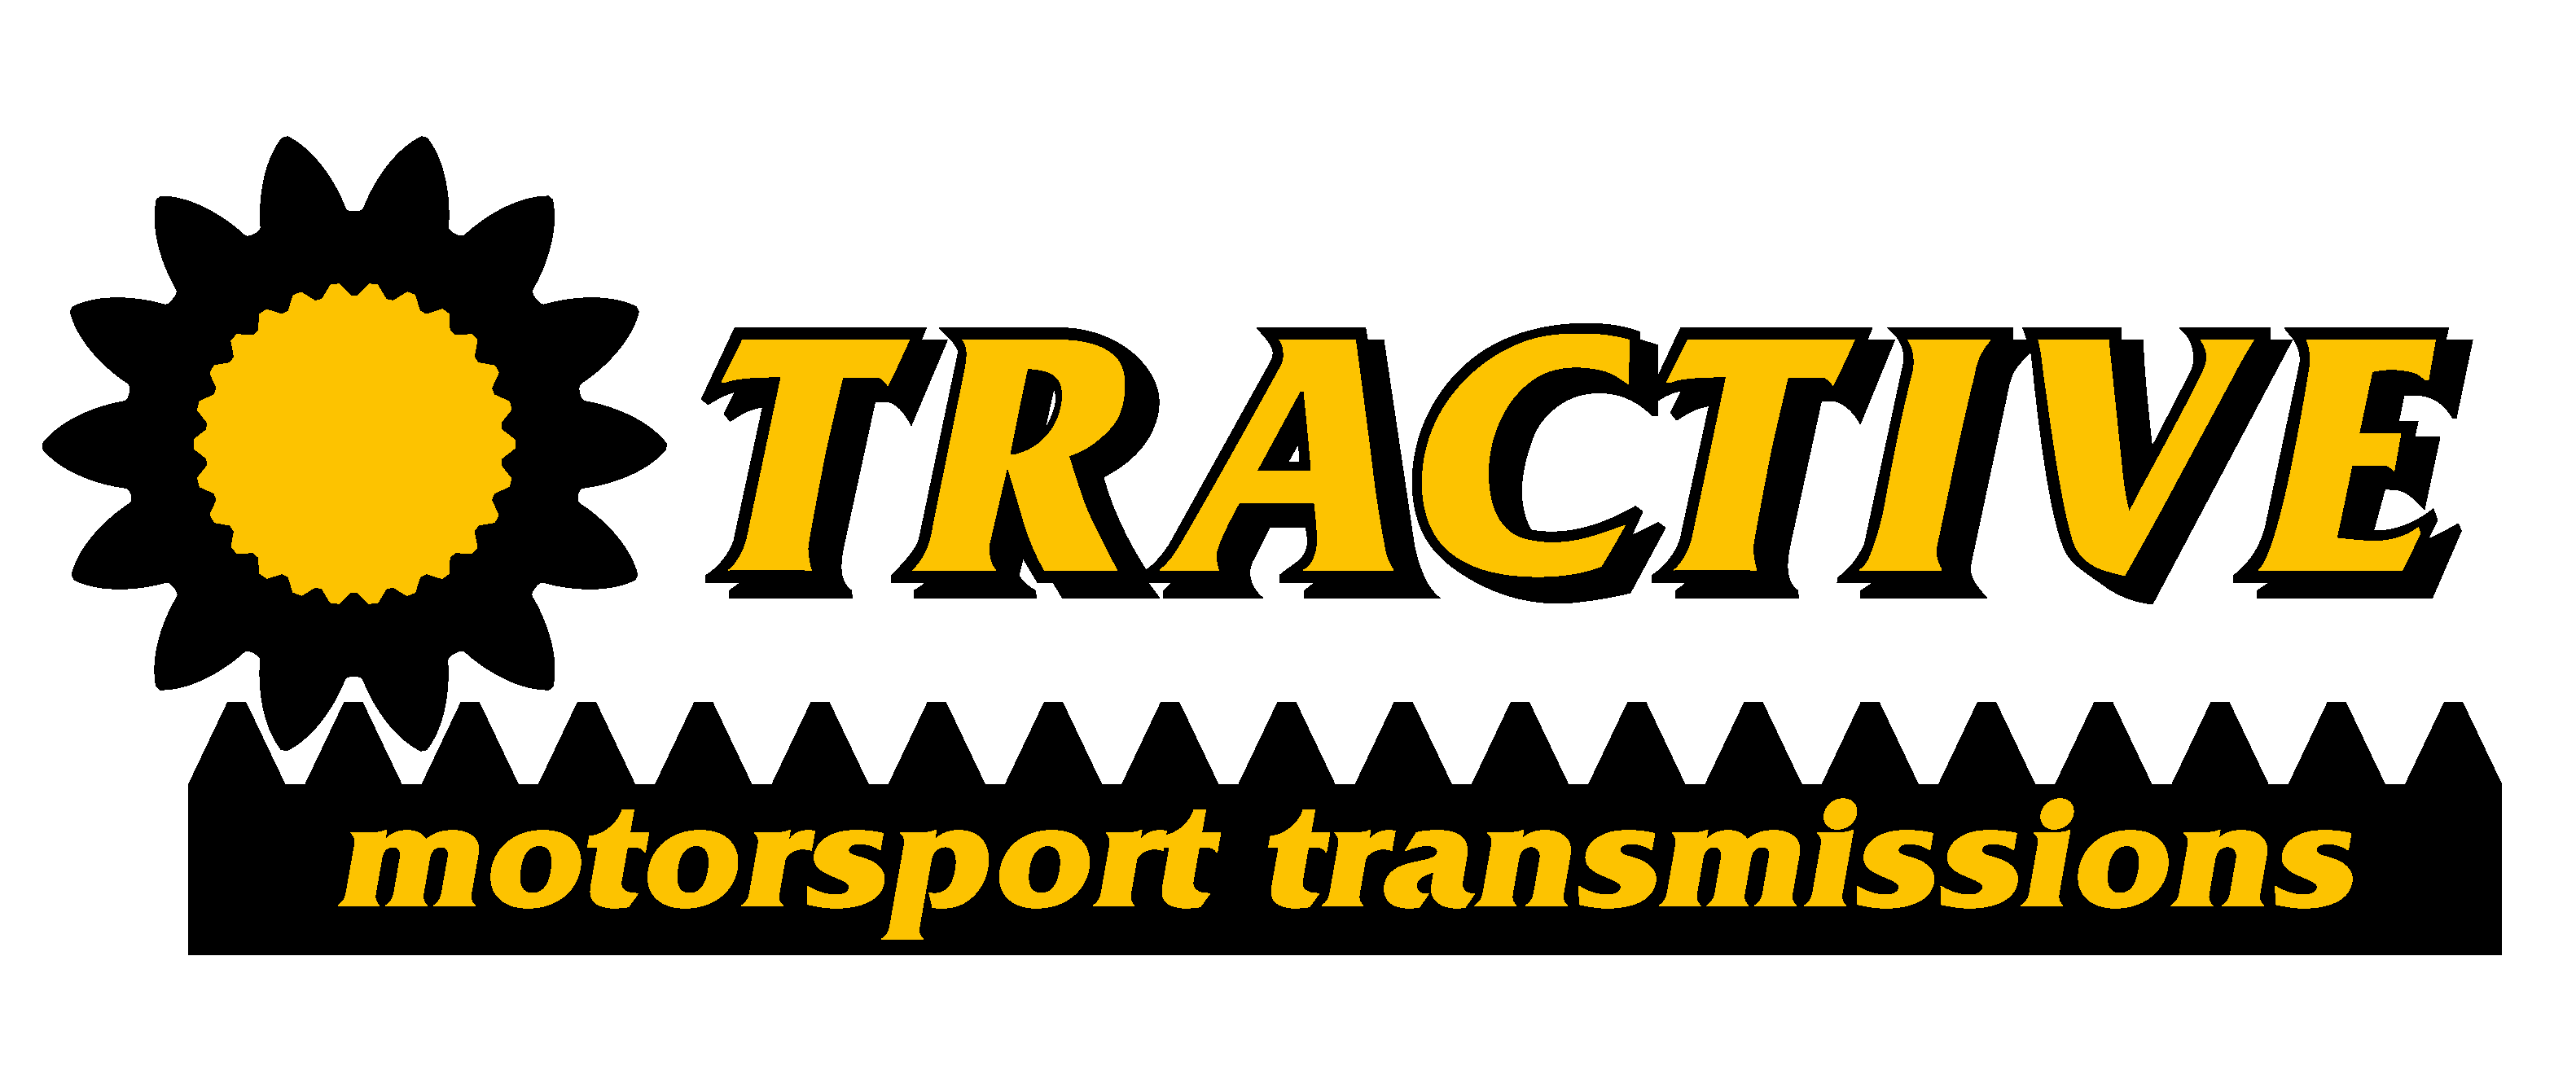 Tractive Motorsport logo - m skugga.png